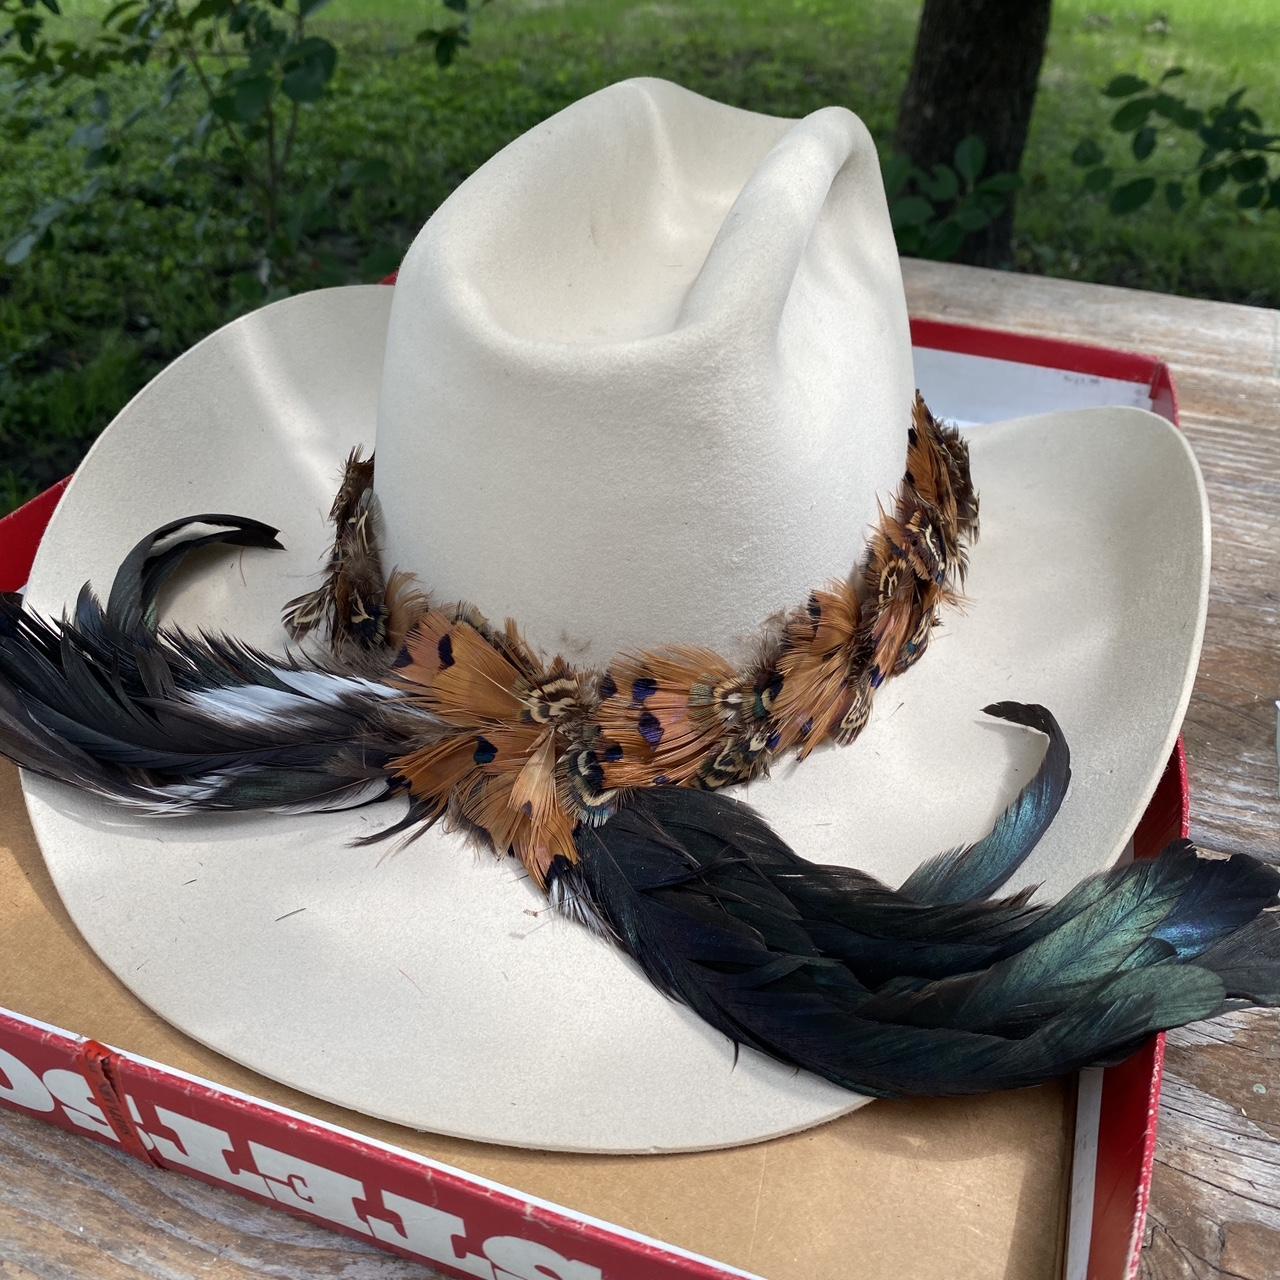 70s Stetson Cowboy Hat 6-3/4 size Originally from - Depop